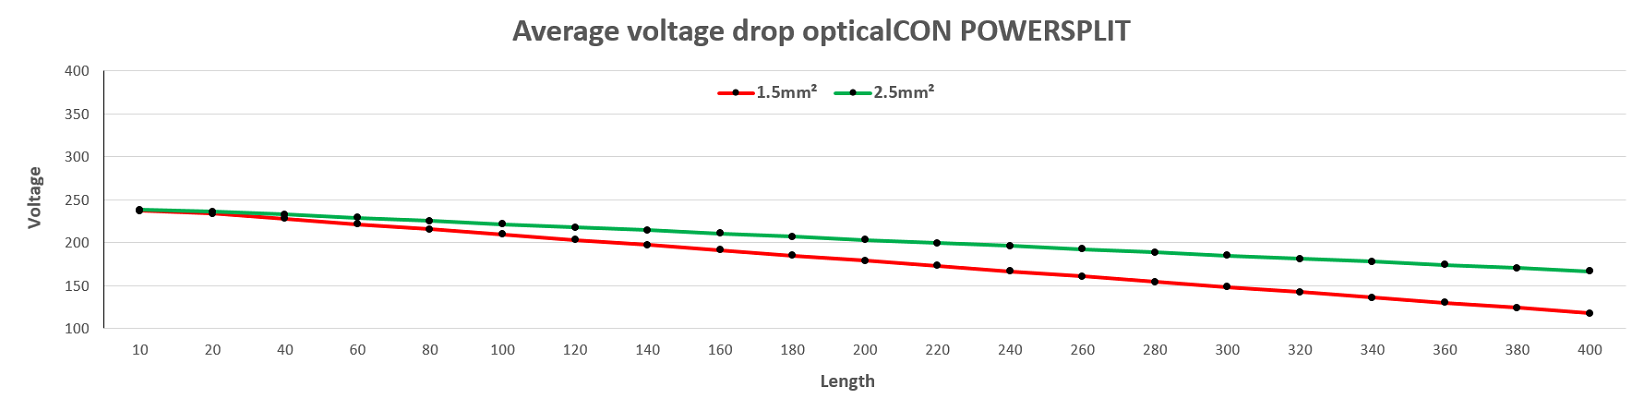 Voltage drop POWERSPLIT_2